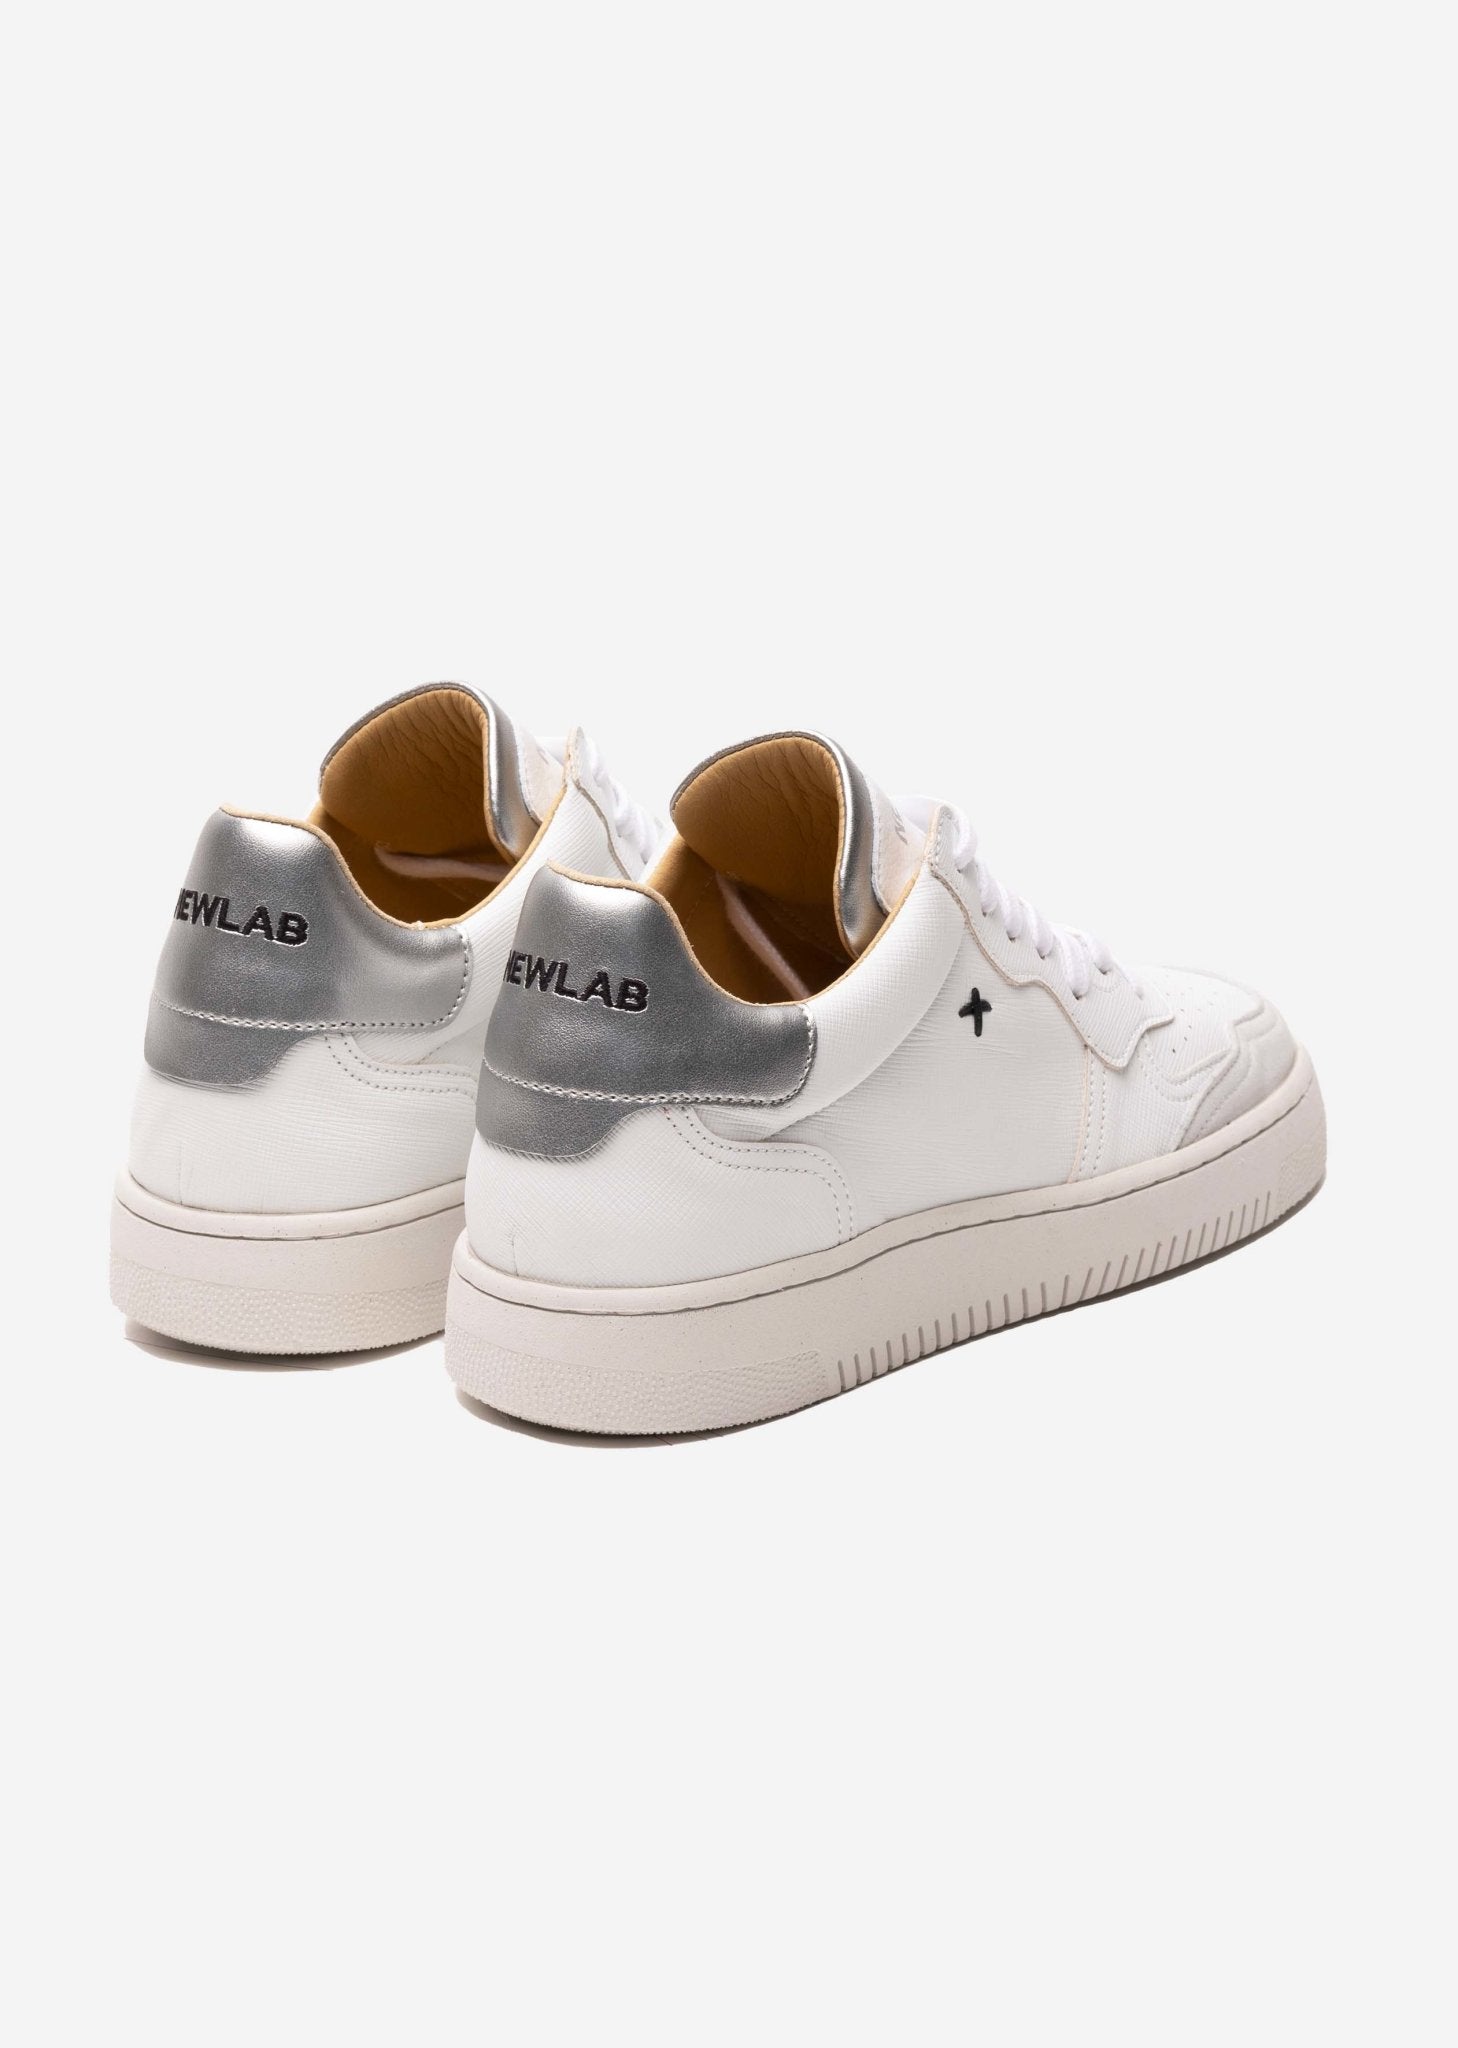 NL11 White/Silver - NEWLAB - Chaussures - NEWLAB